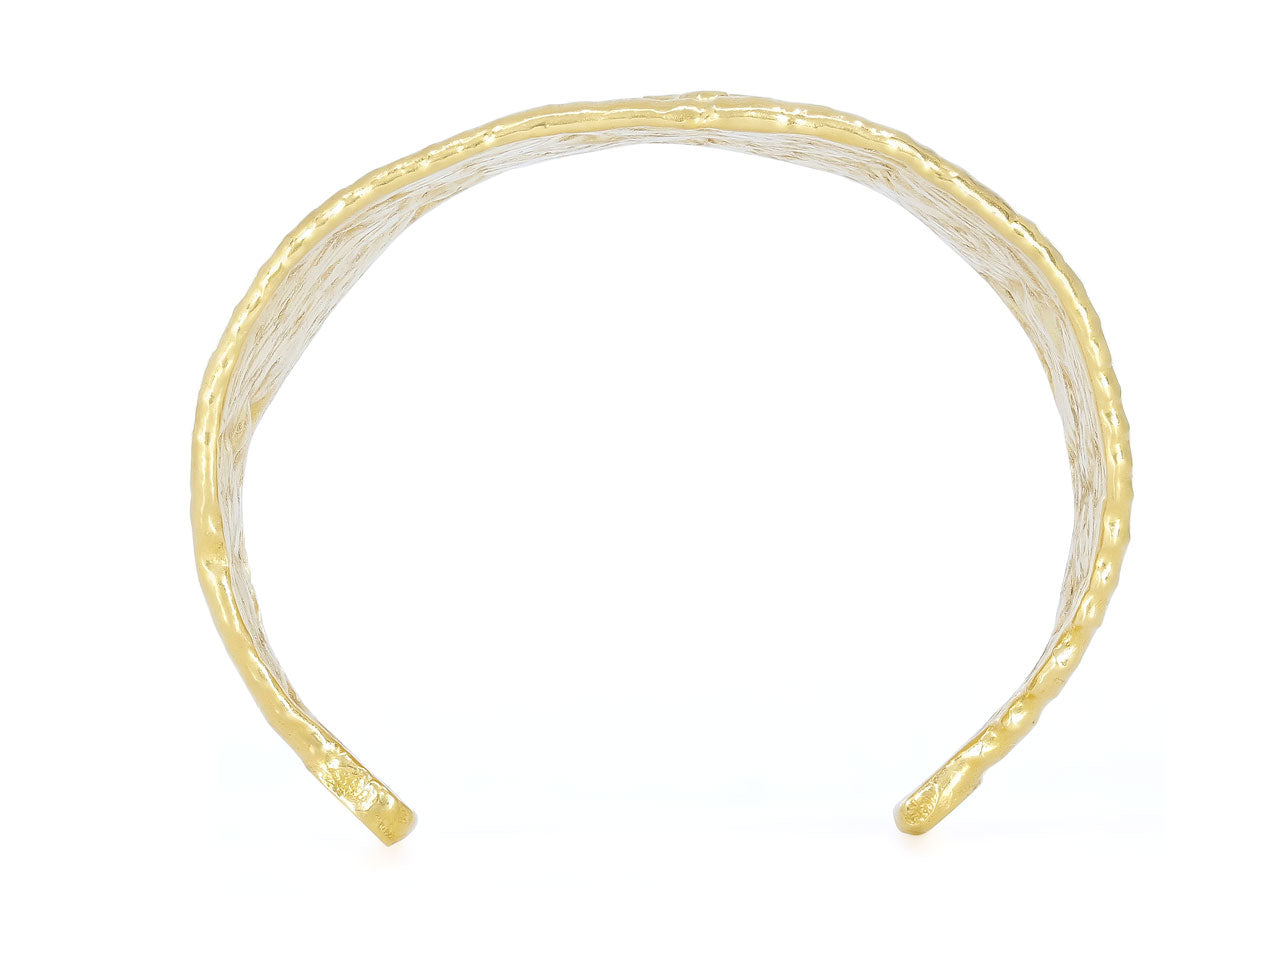 Jean Mahie 'Charming Monsters' Cuff Bracelet in 22K Gold